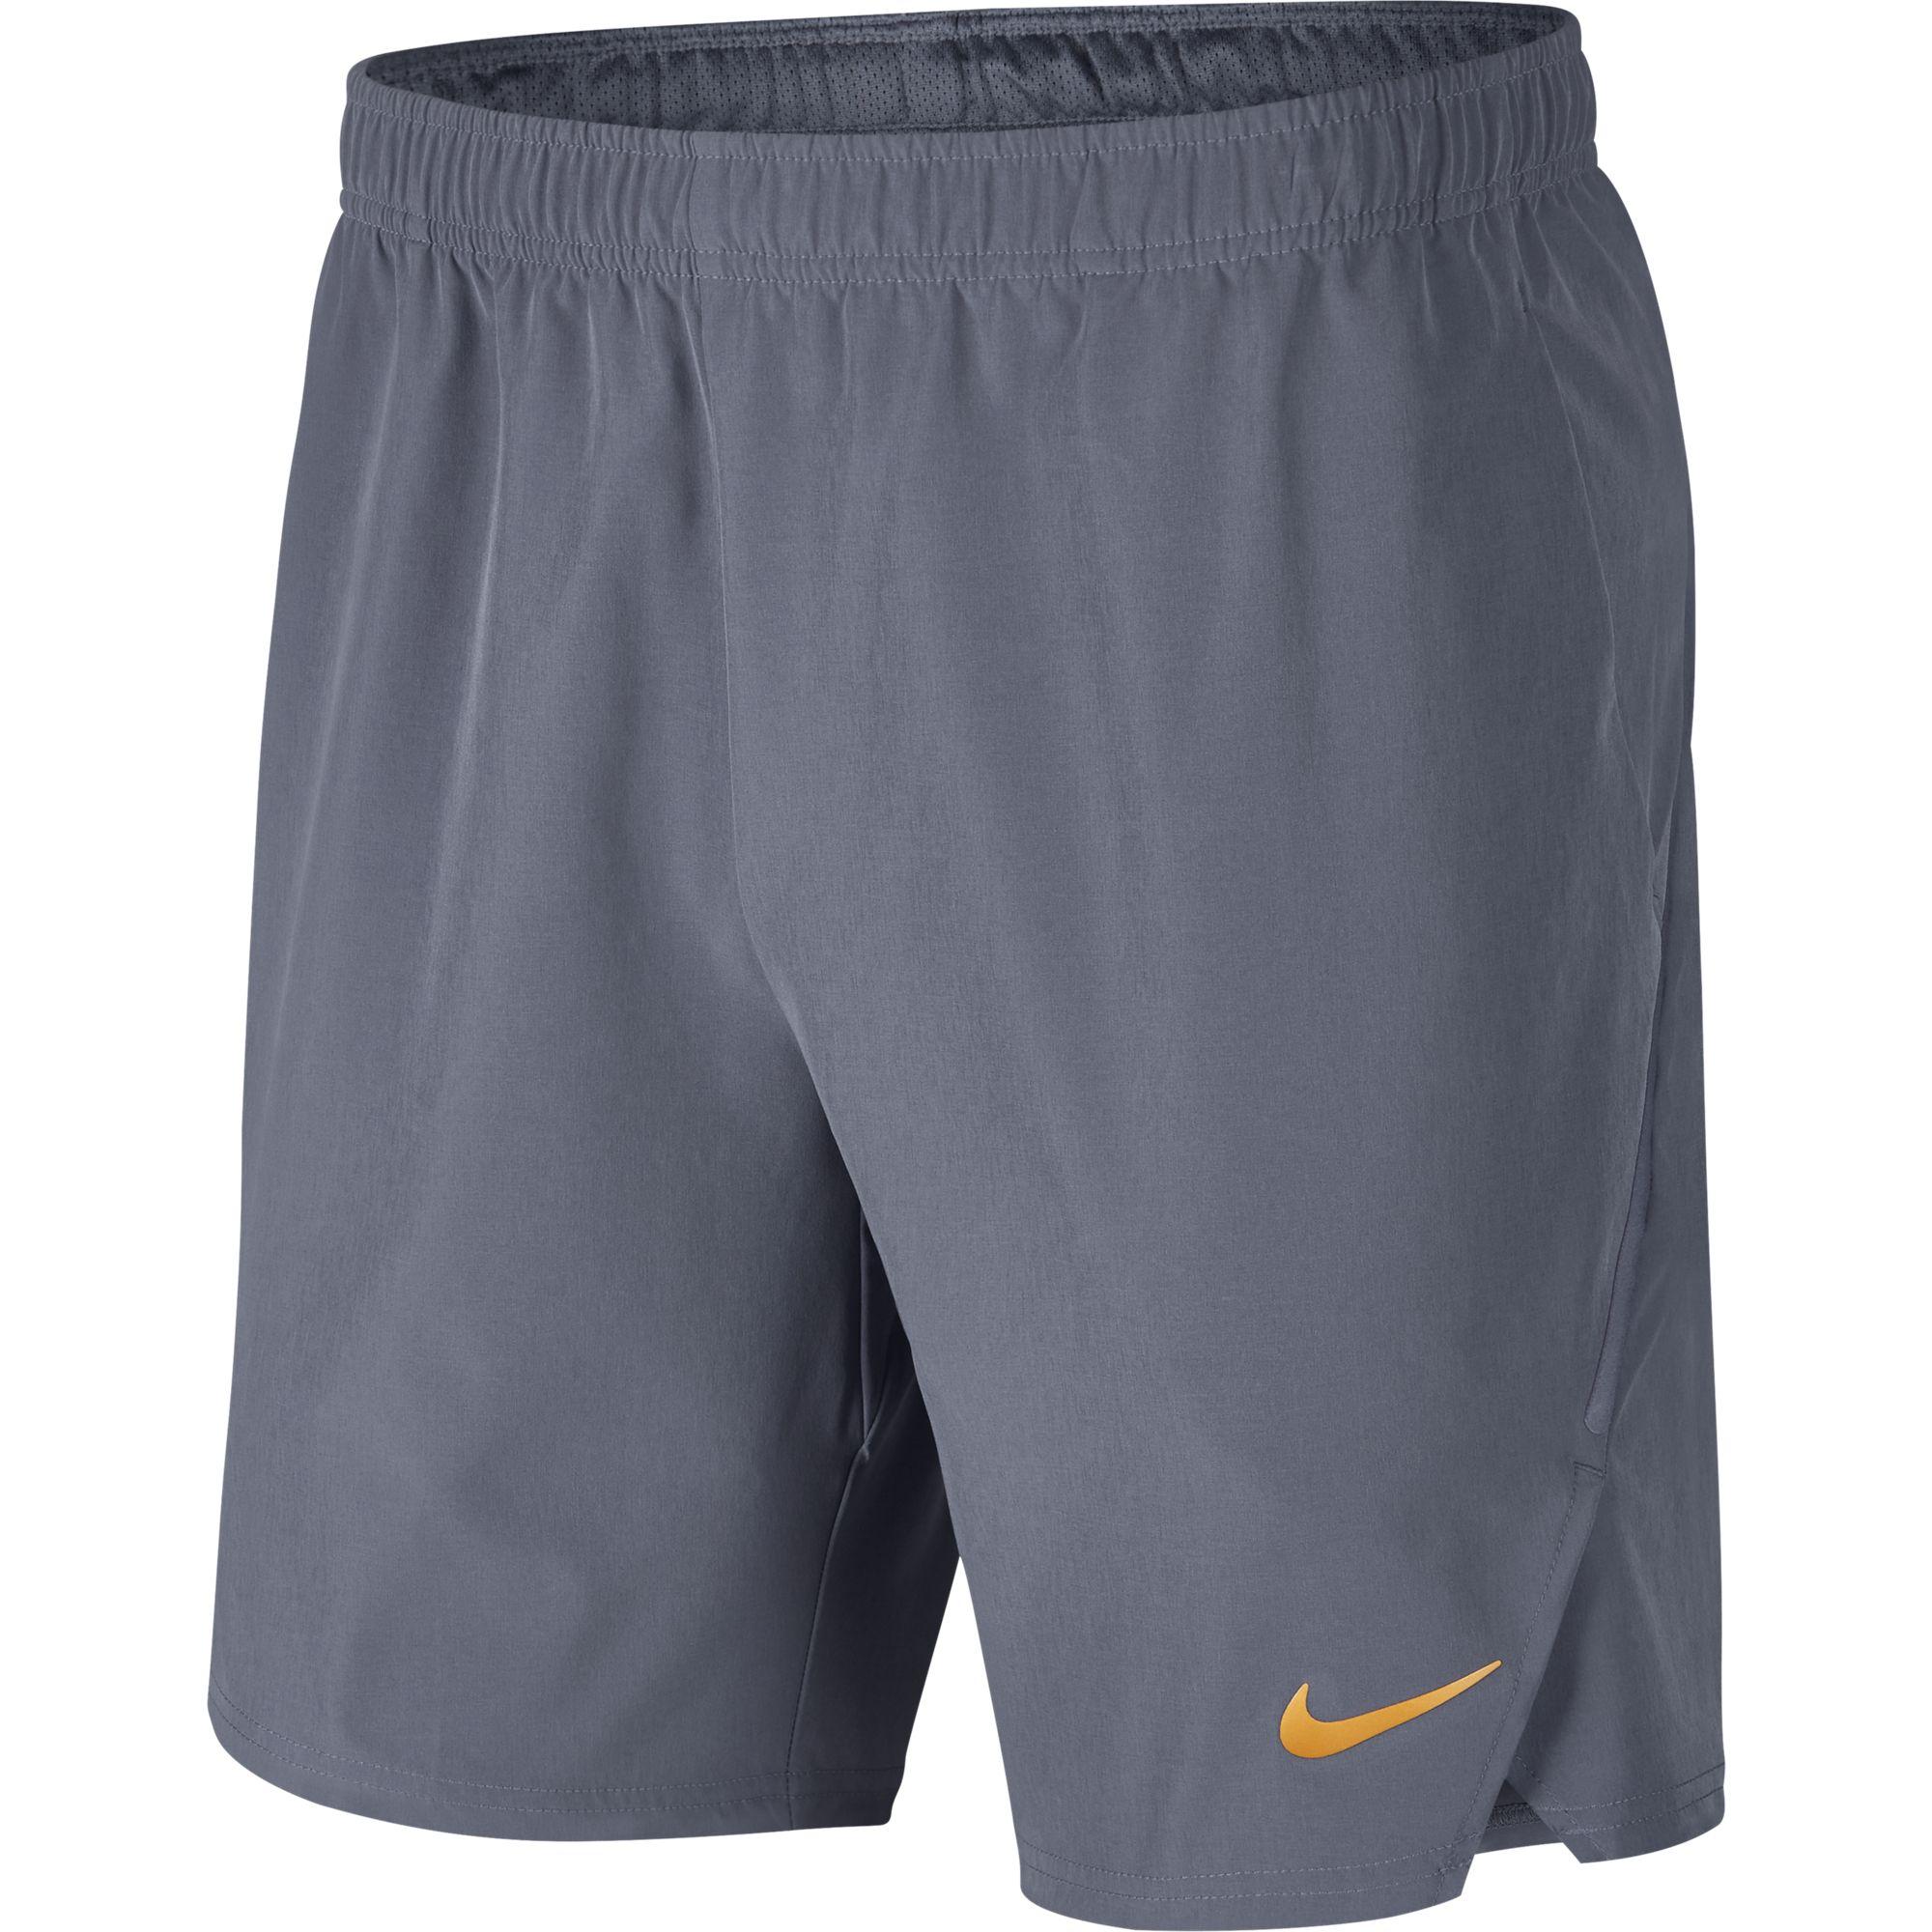 Nike Mens Flex Ace 9 Inch Shorts - Light Carbon/Canyon Gold - Tennisnuts.com